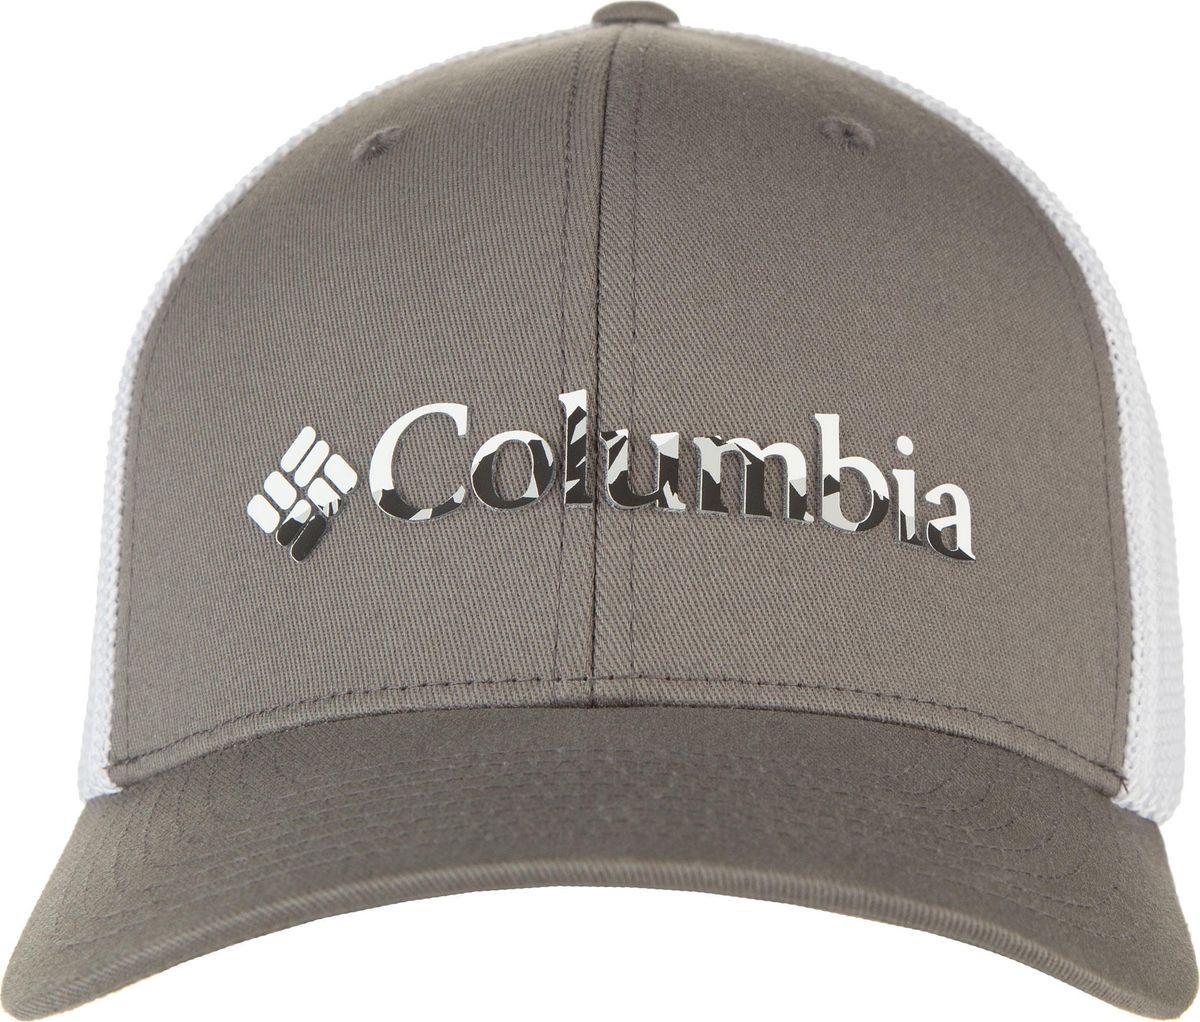  Columbia Mesh Ballcap, : . 1495921-049.  L/XL (58/59)